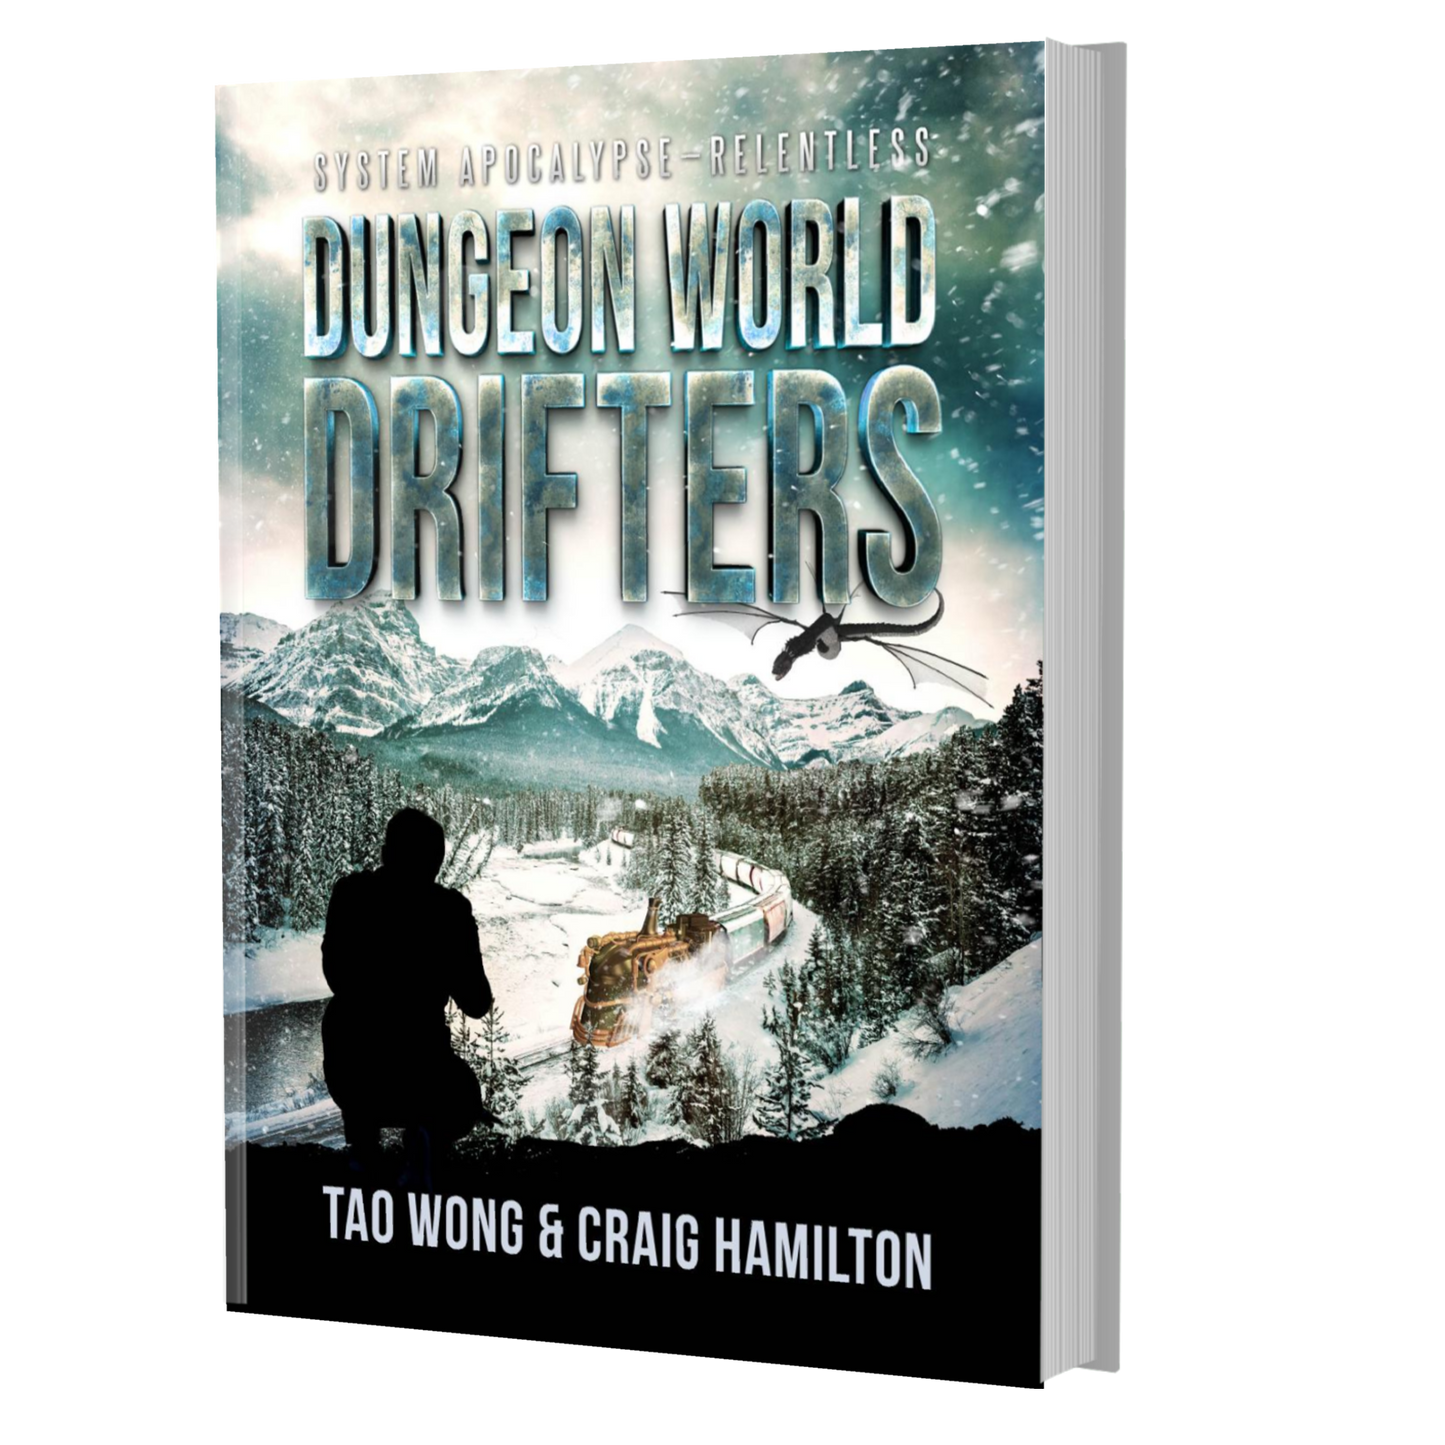 Dungeon World Drifters (System Apocalypse: Relentless #2)